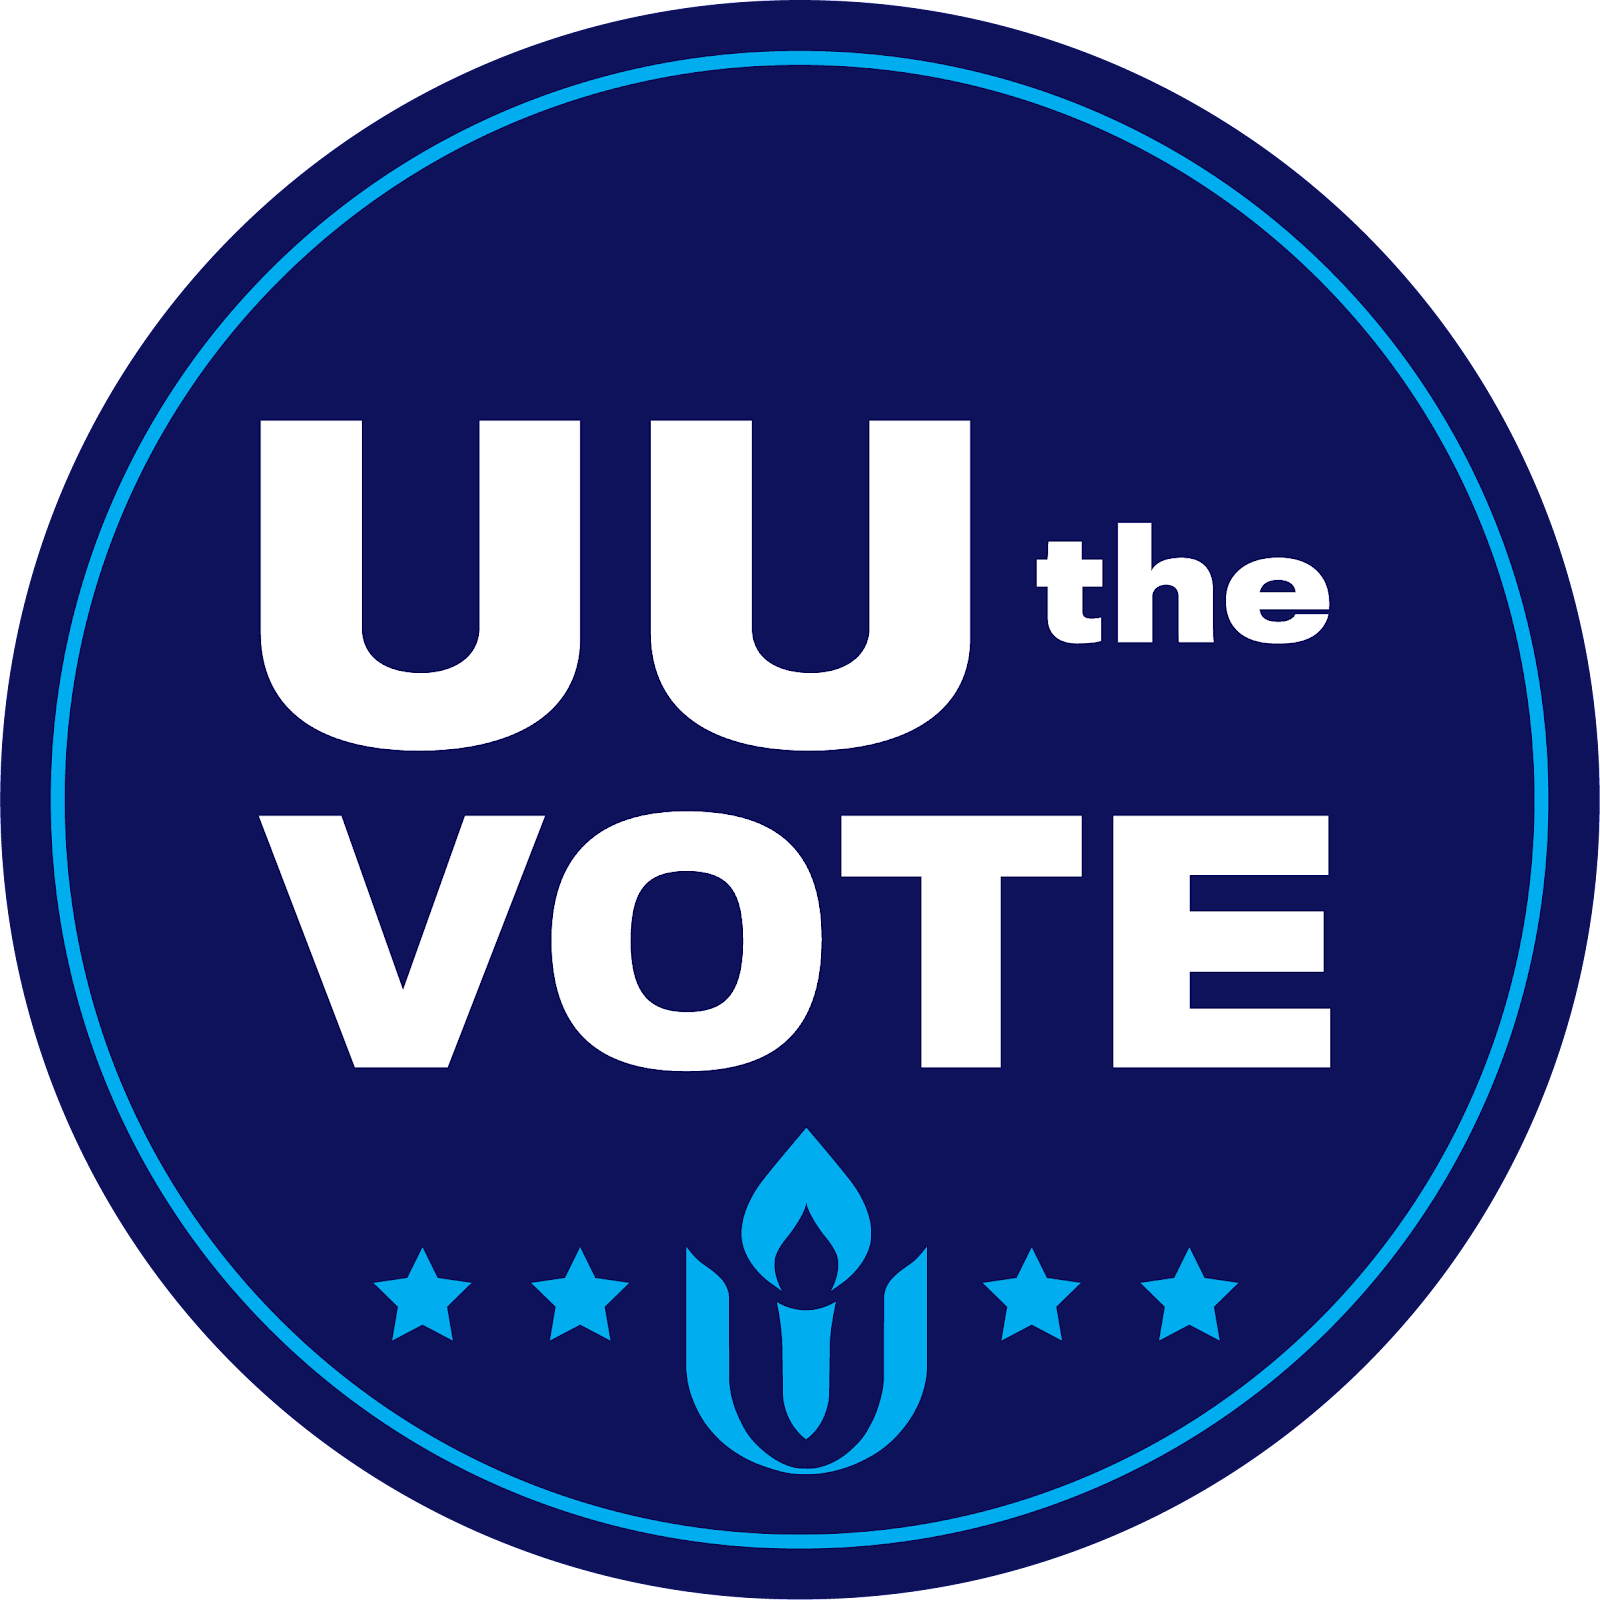 UU the Vote